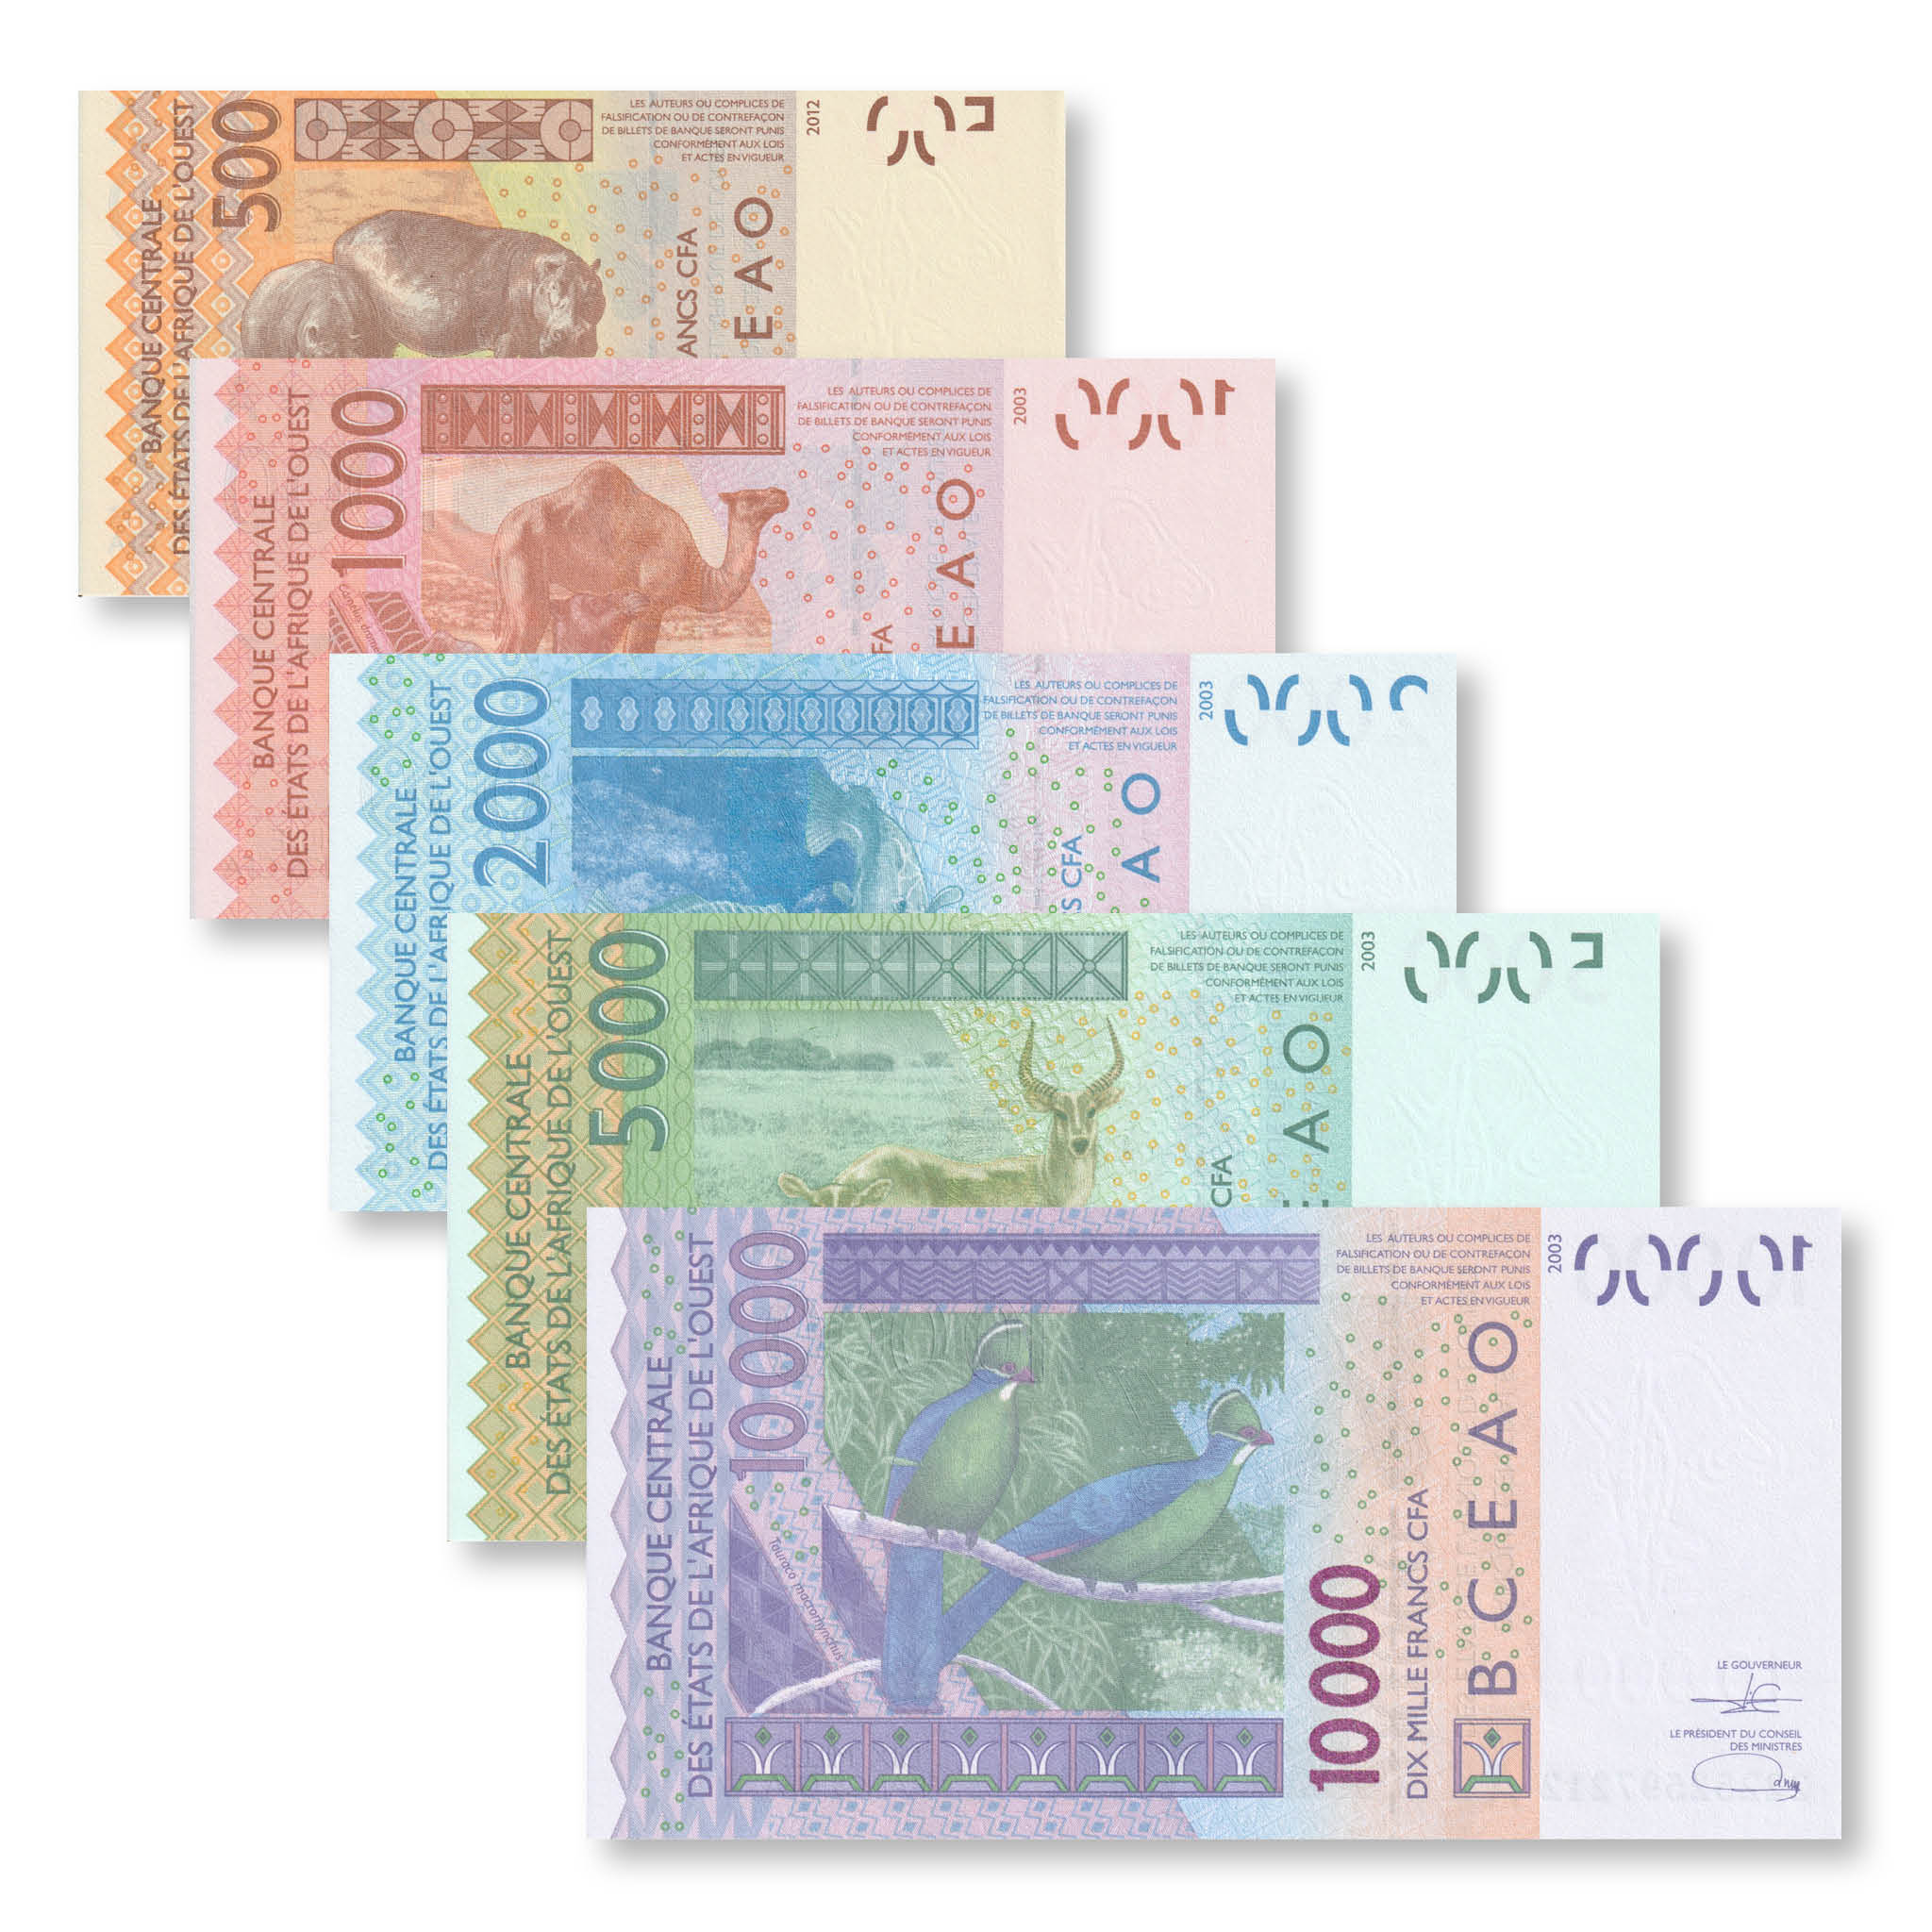 West African States, Ivory Coast Set: 500–10,000 Francs, 2022, B120A–B124A, UNC - Robert's World Money - World Banknotes